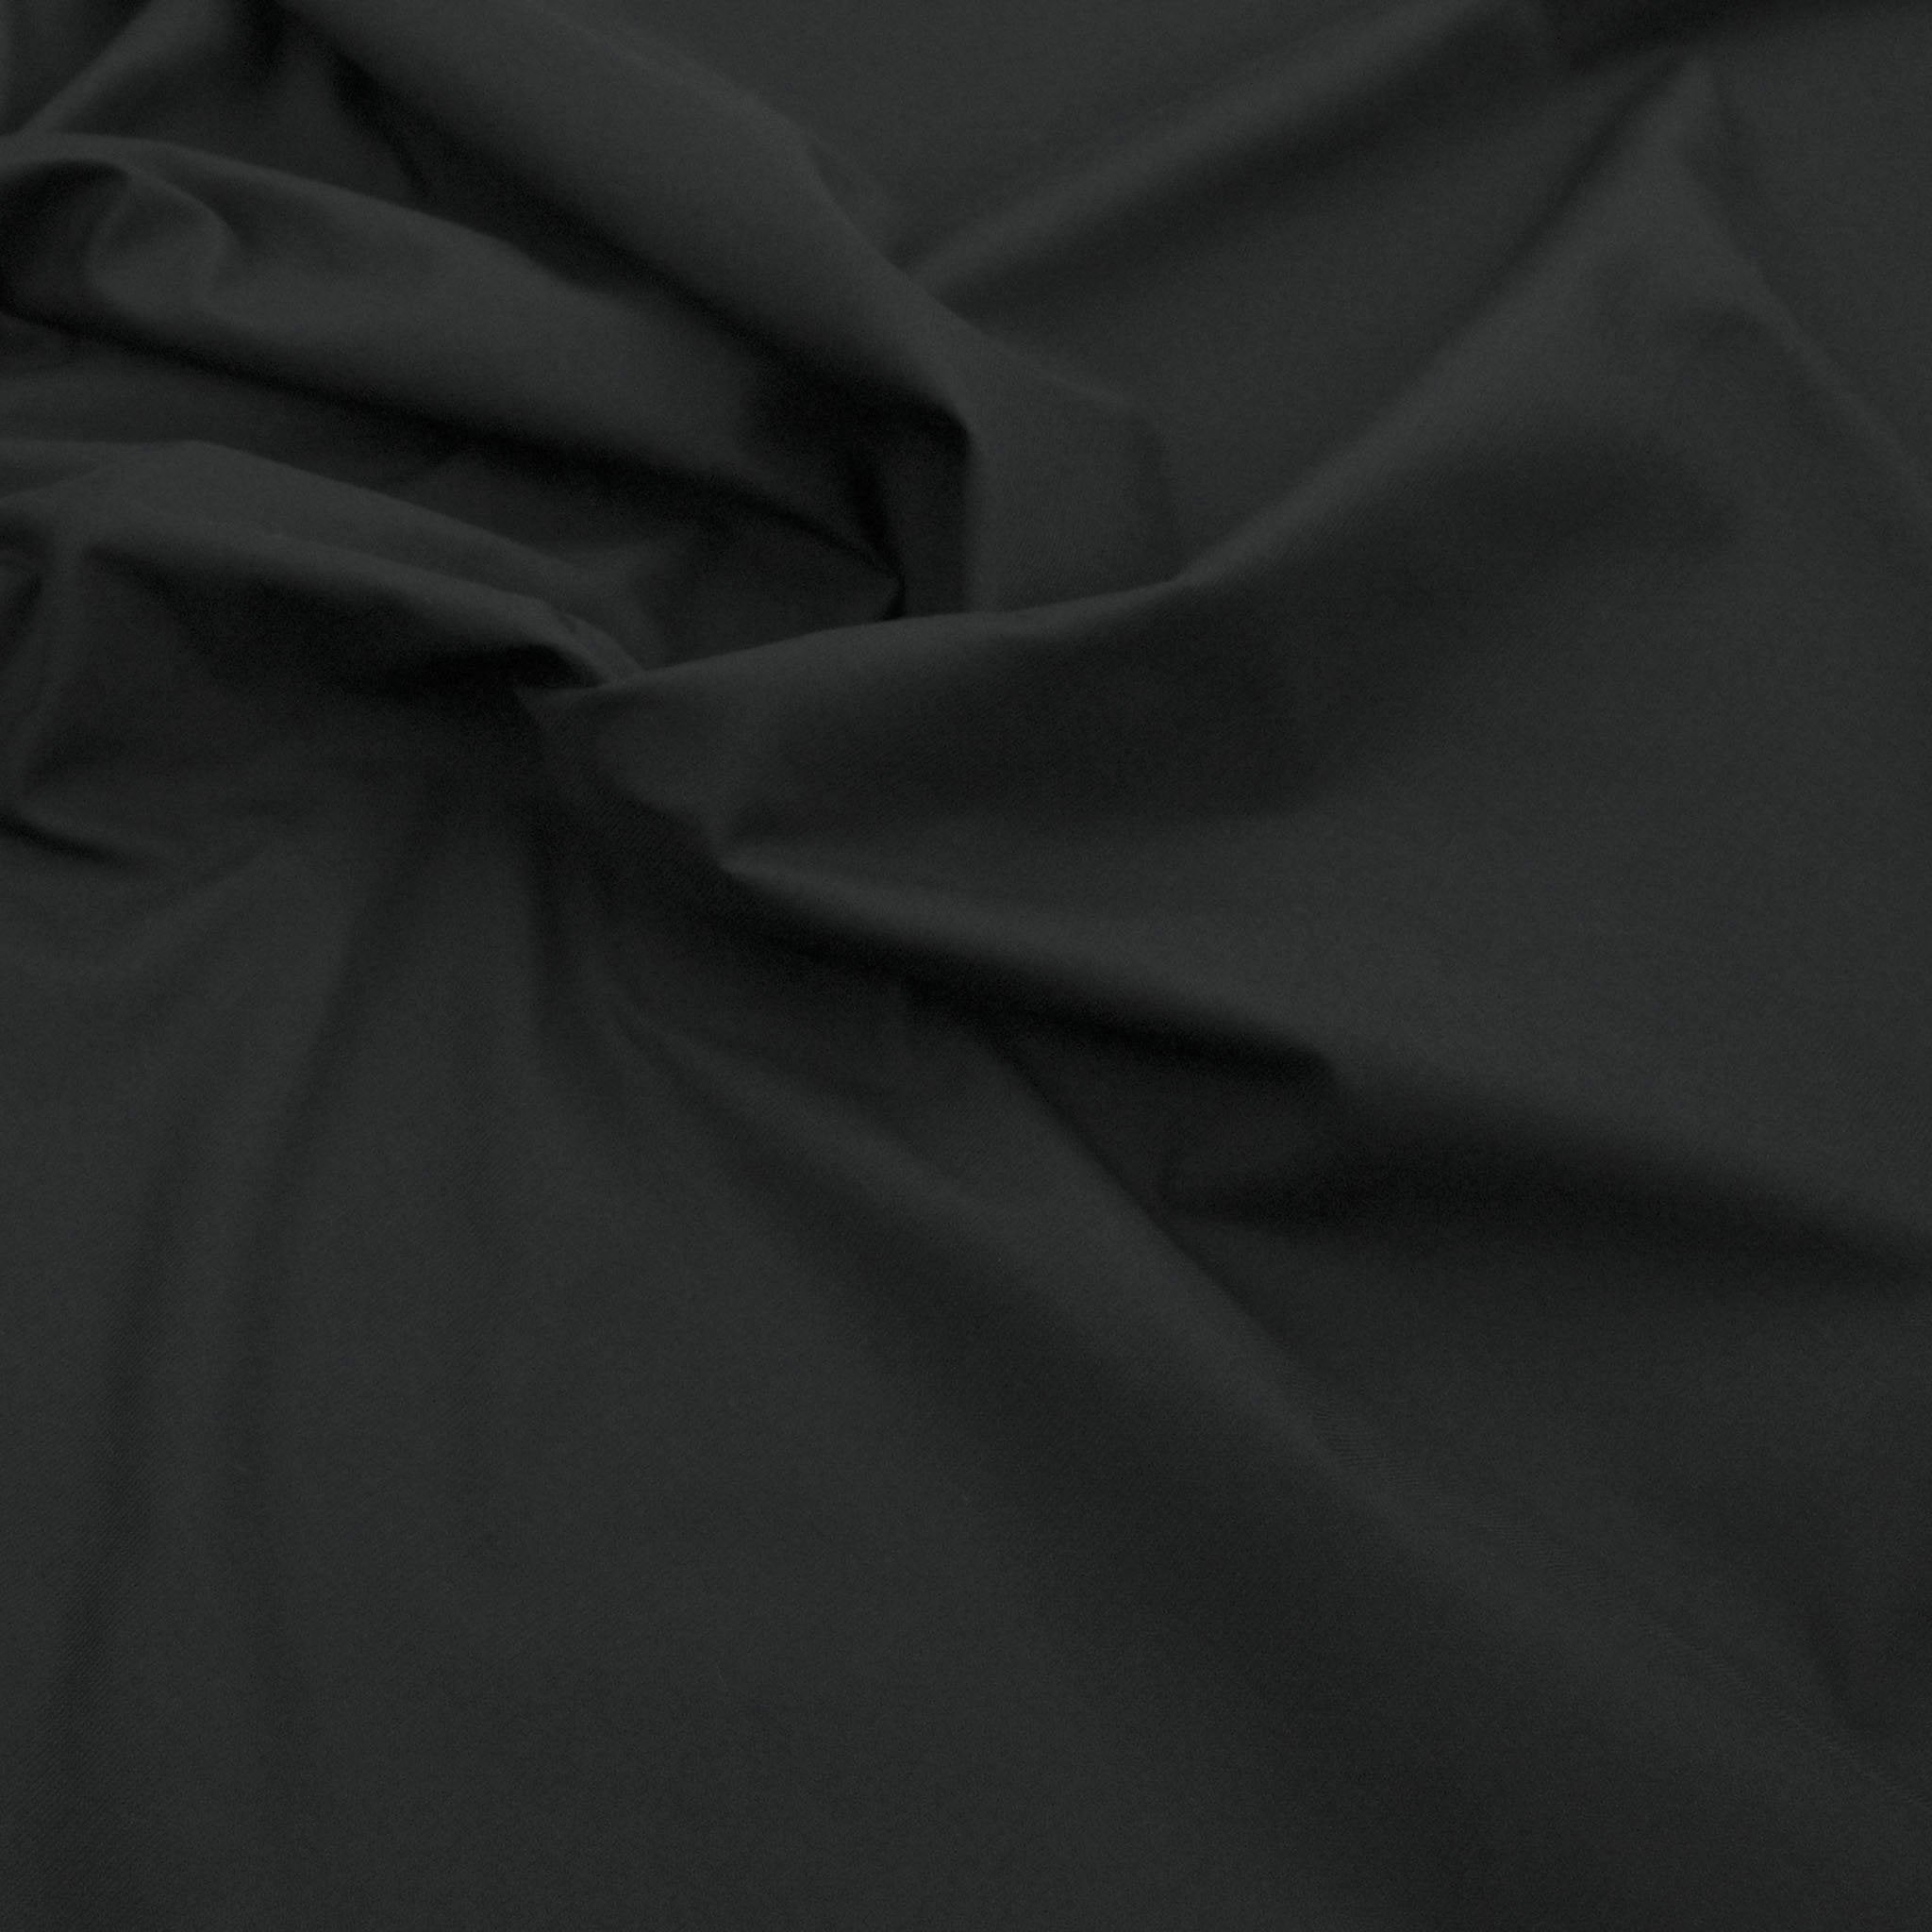 Midnight Suiting Fabric 98144